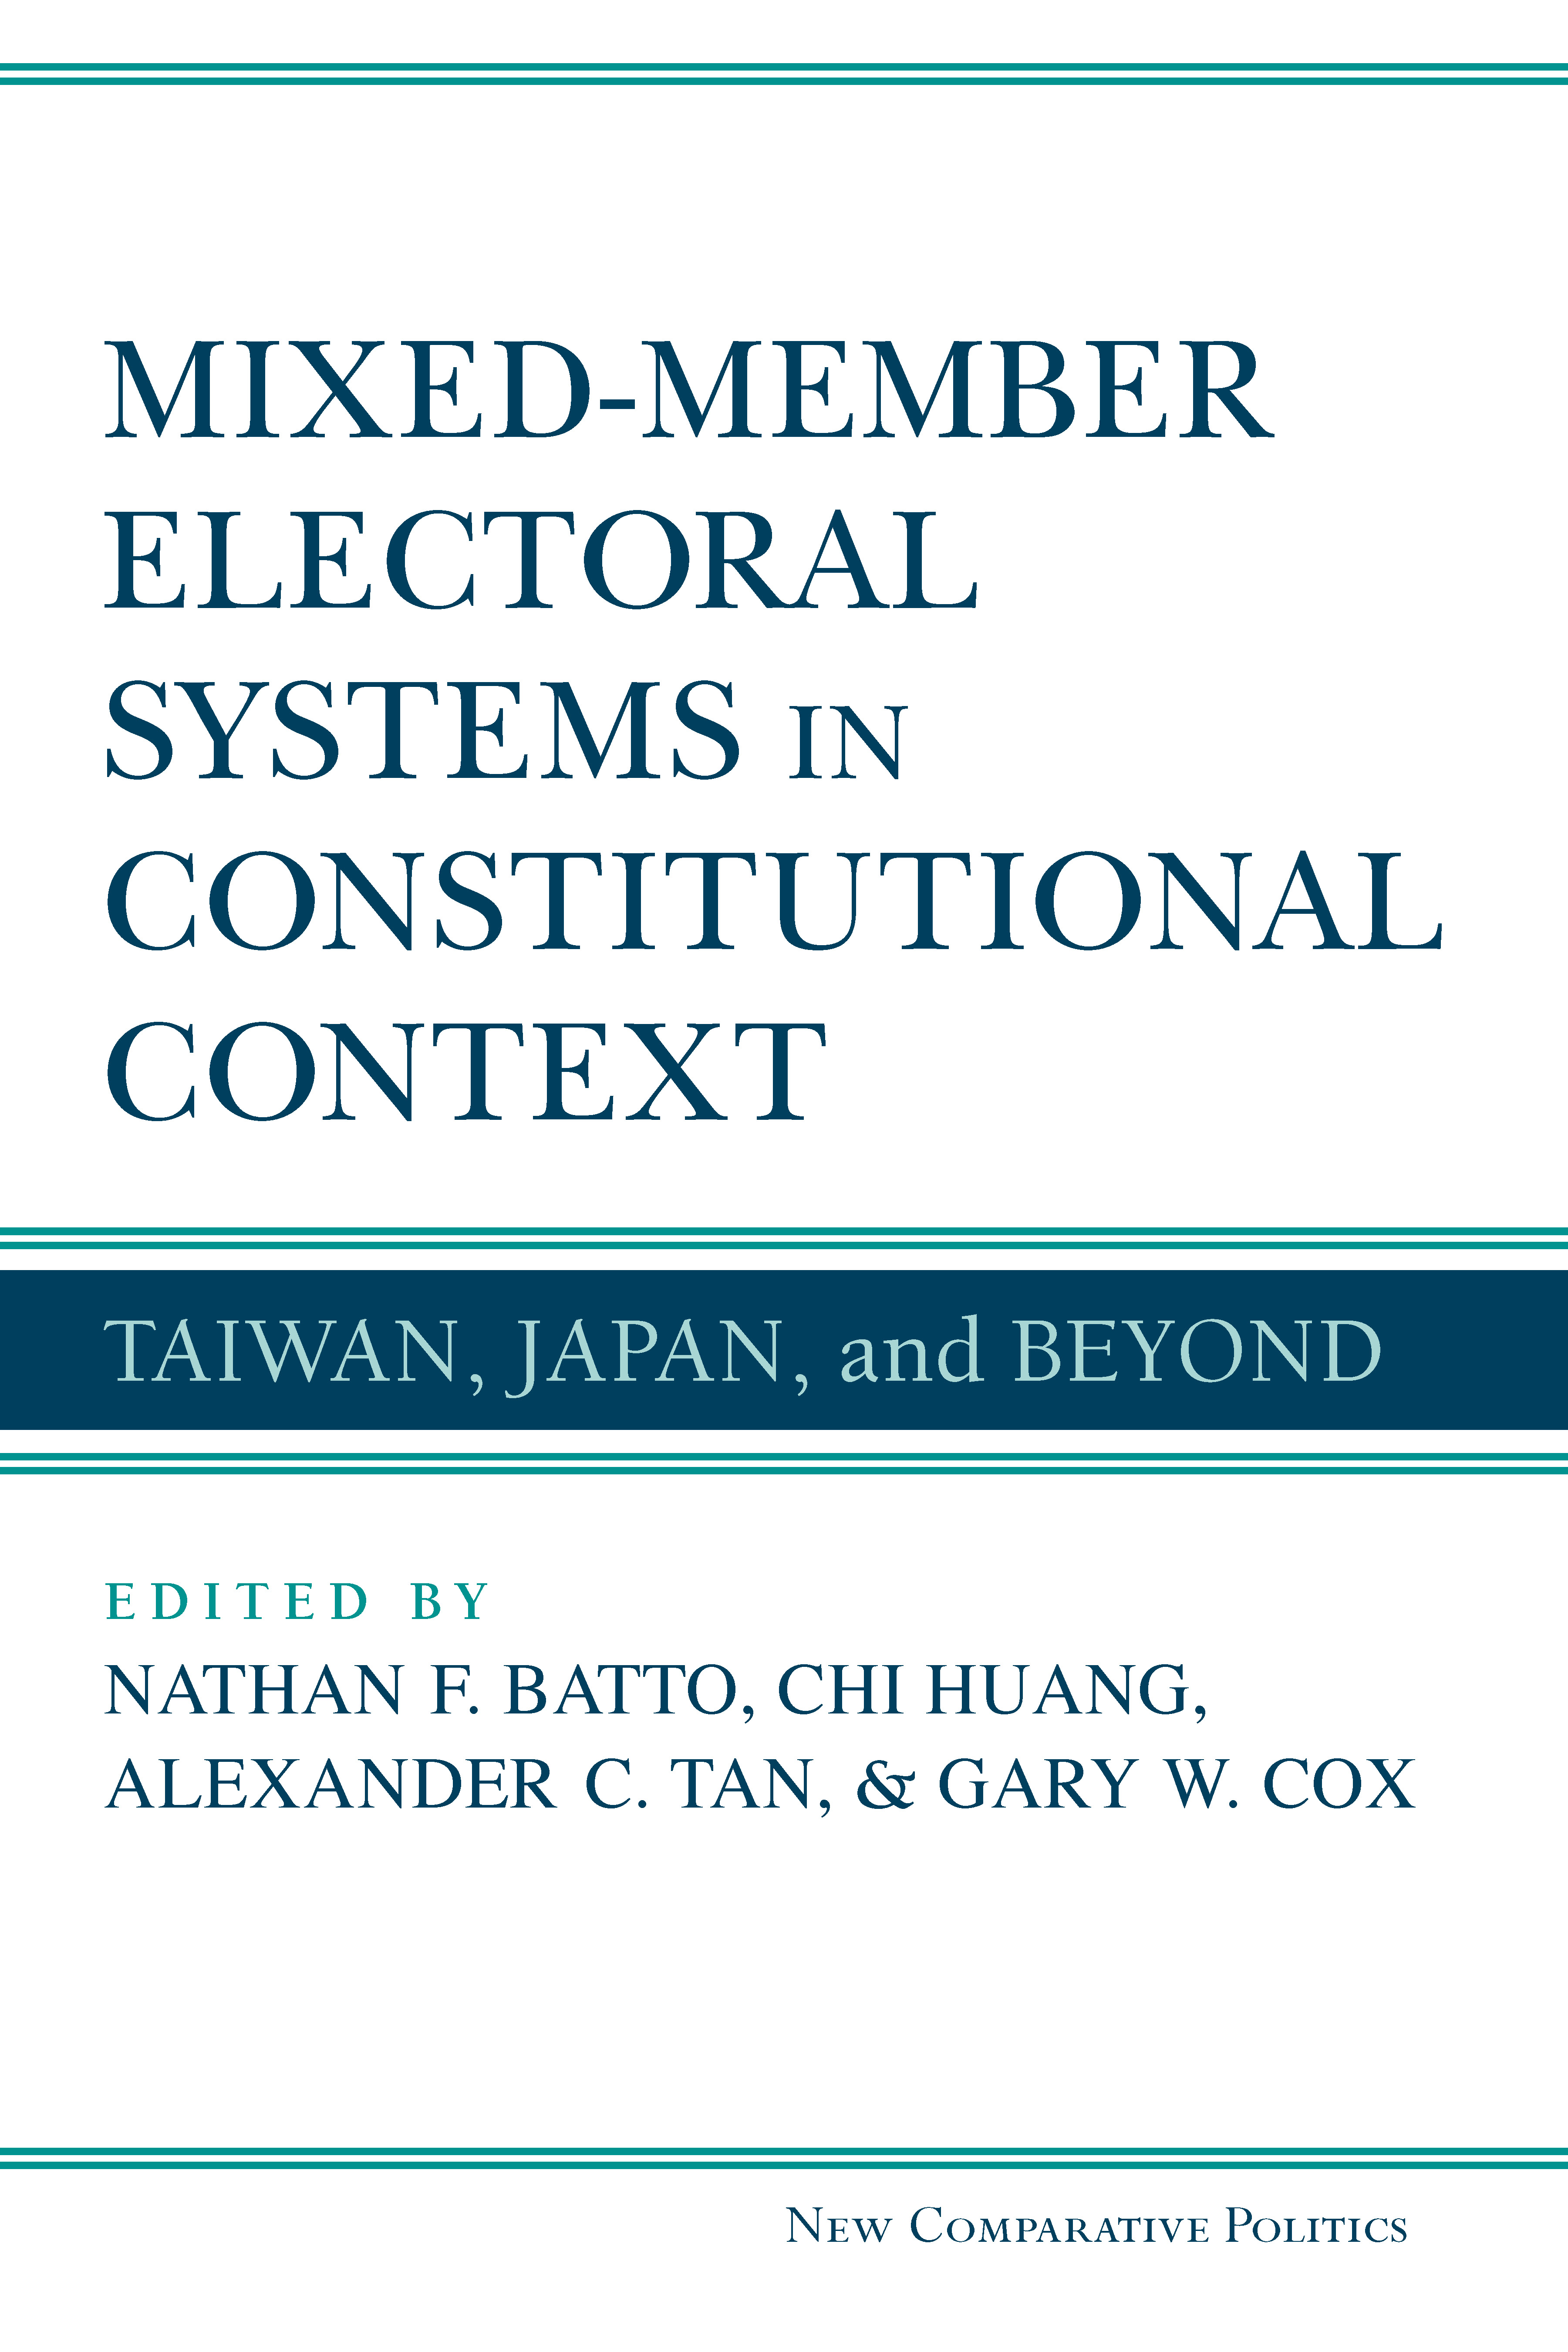 Mixed-Member Electoral Systems Context